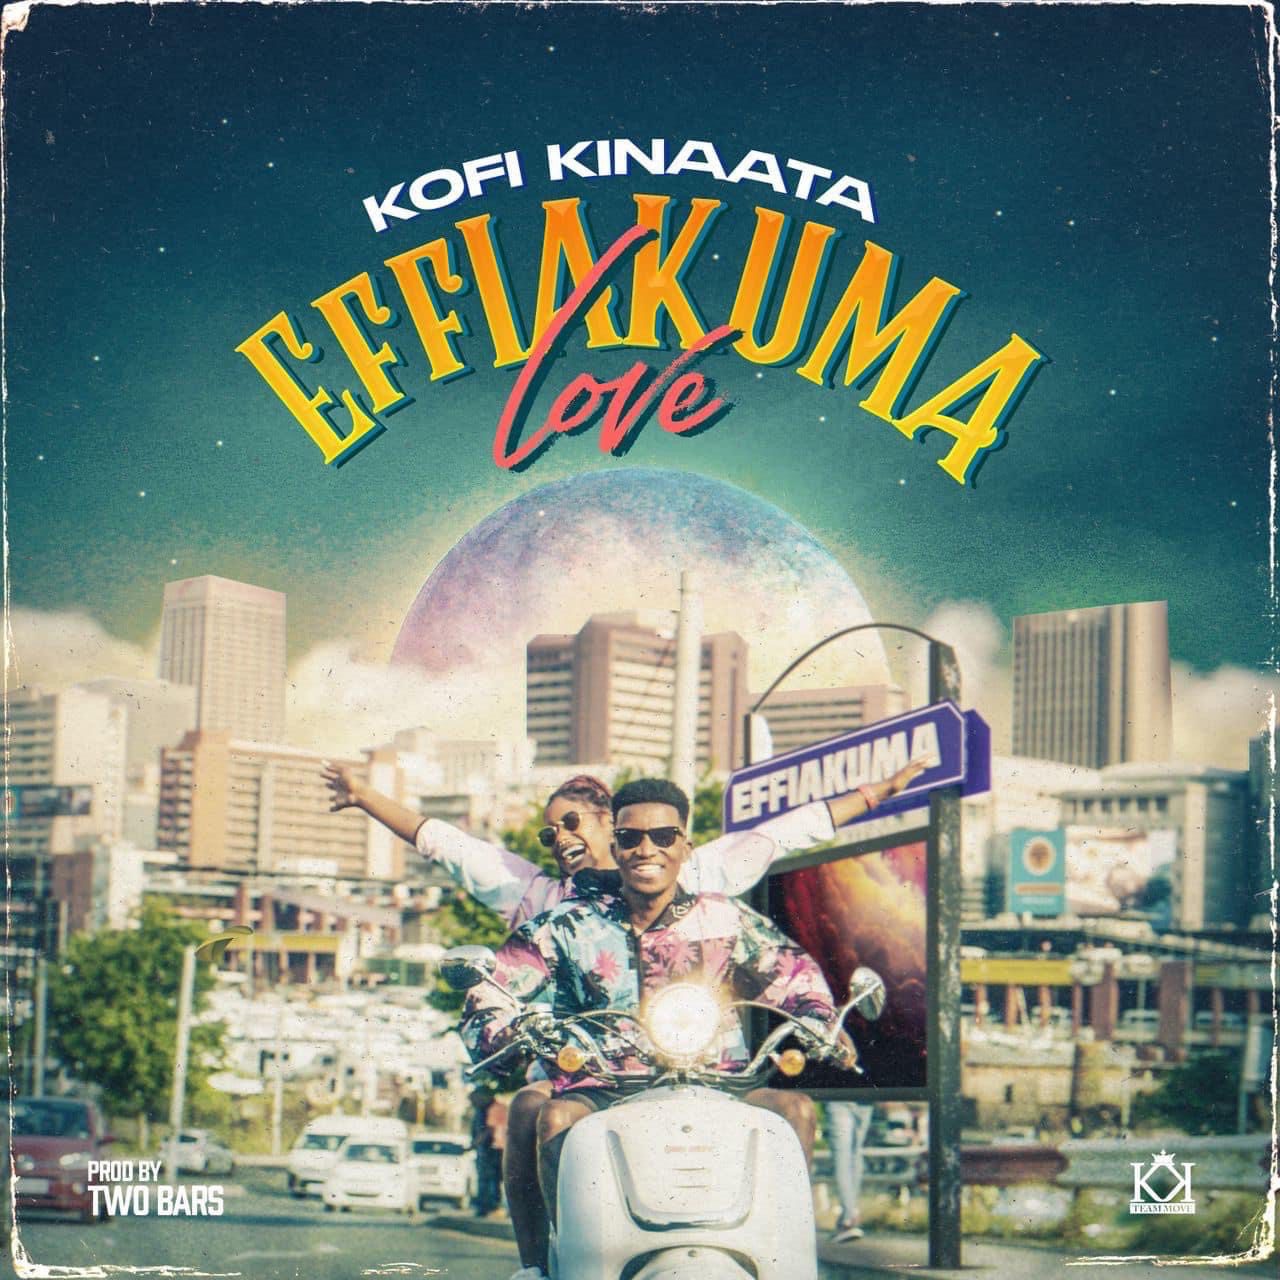 Kofi Kinaata – Effiakuma Love mp3 download